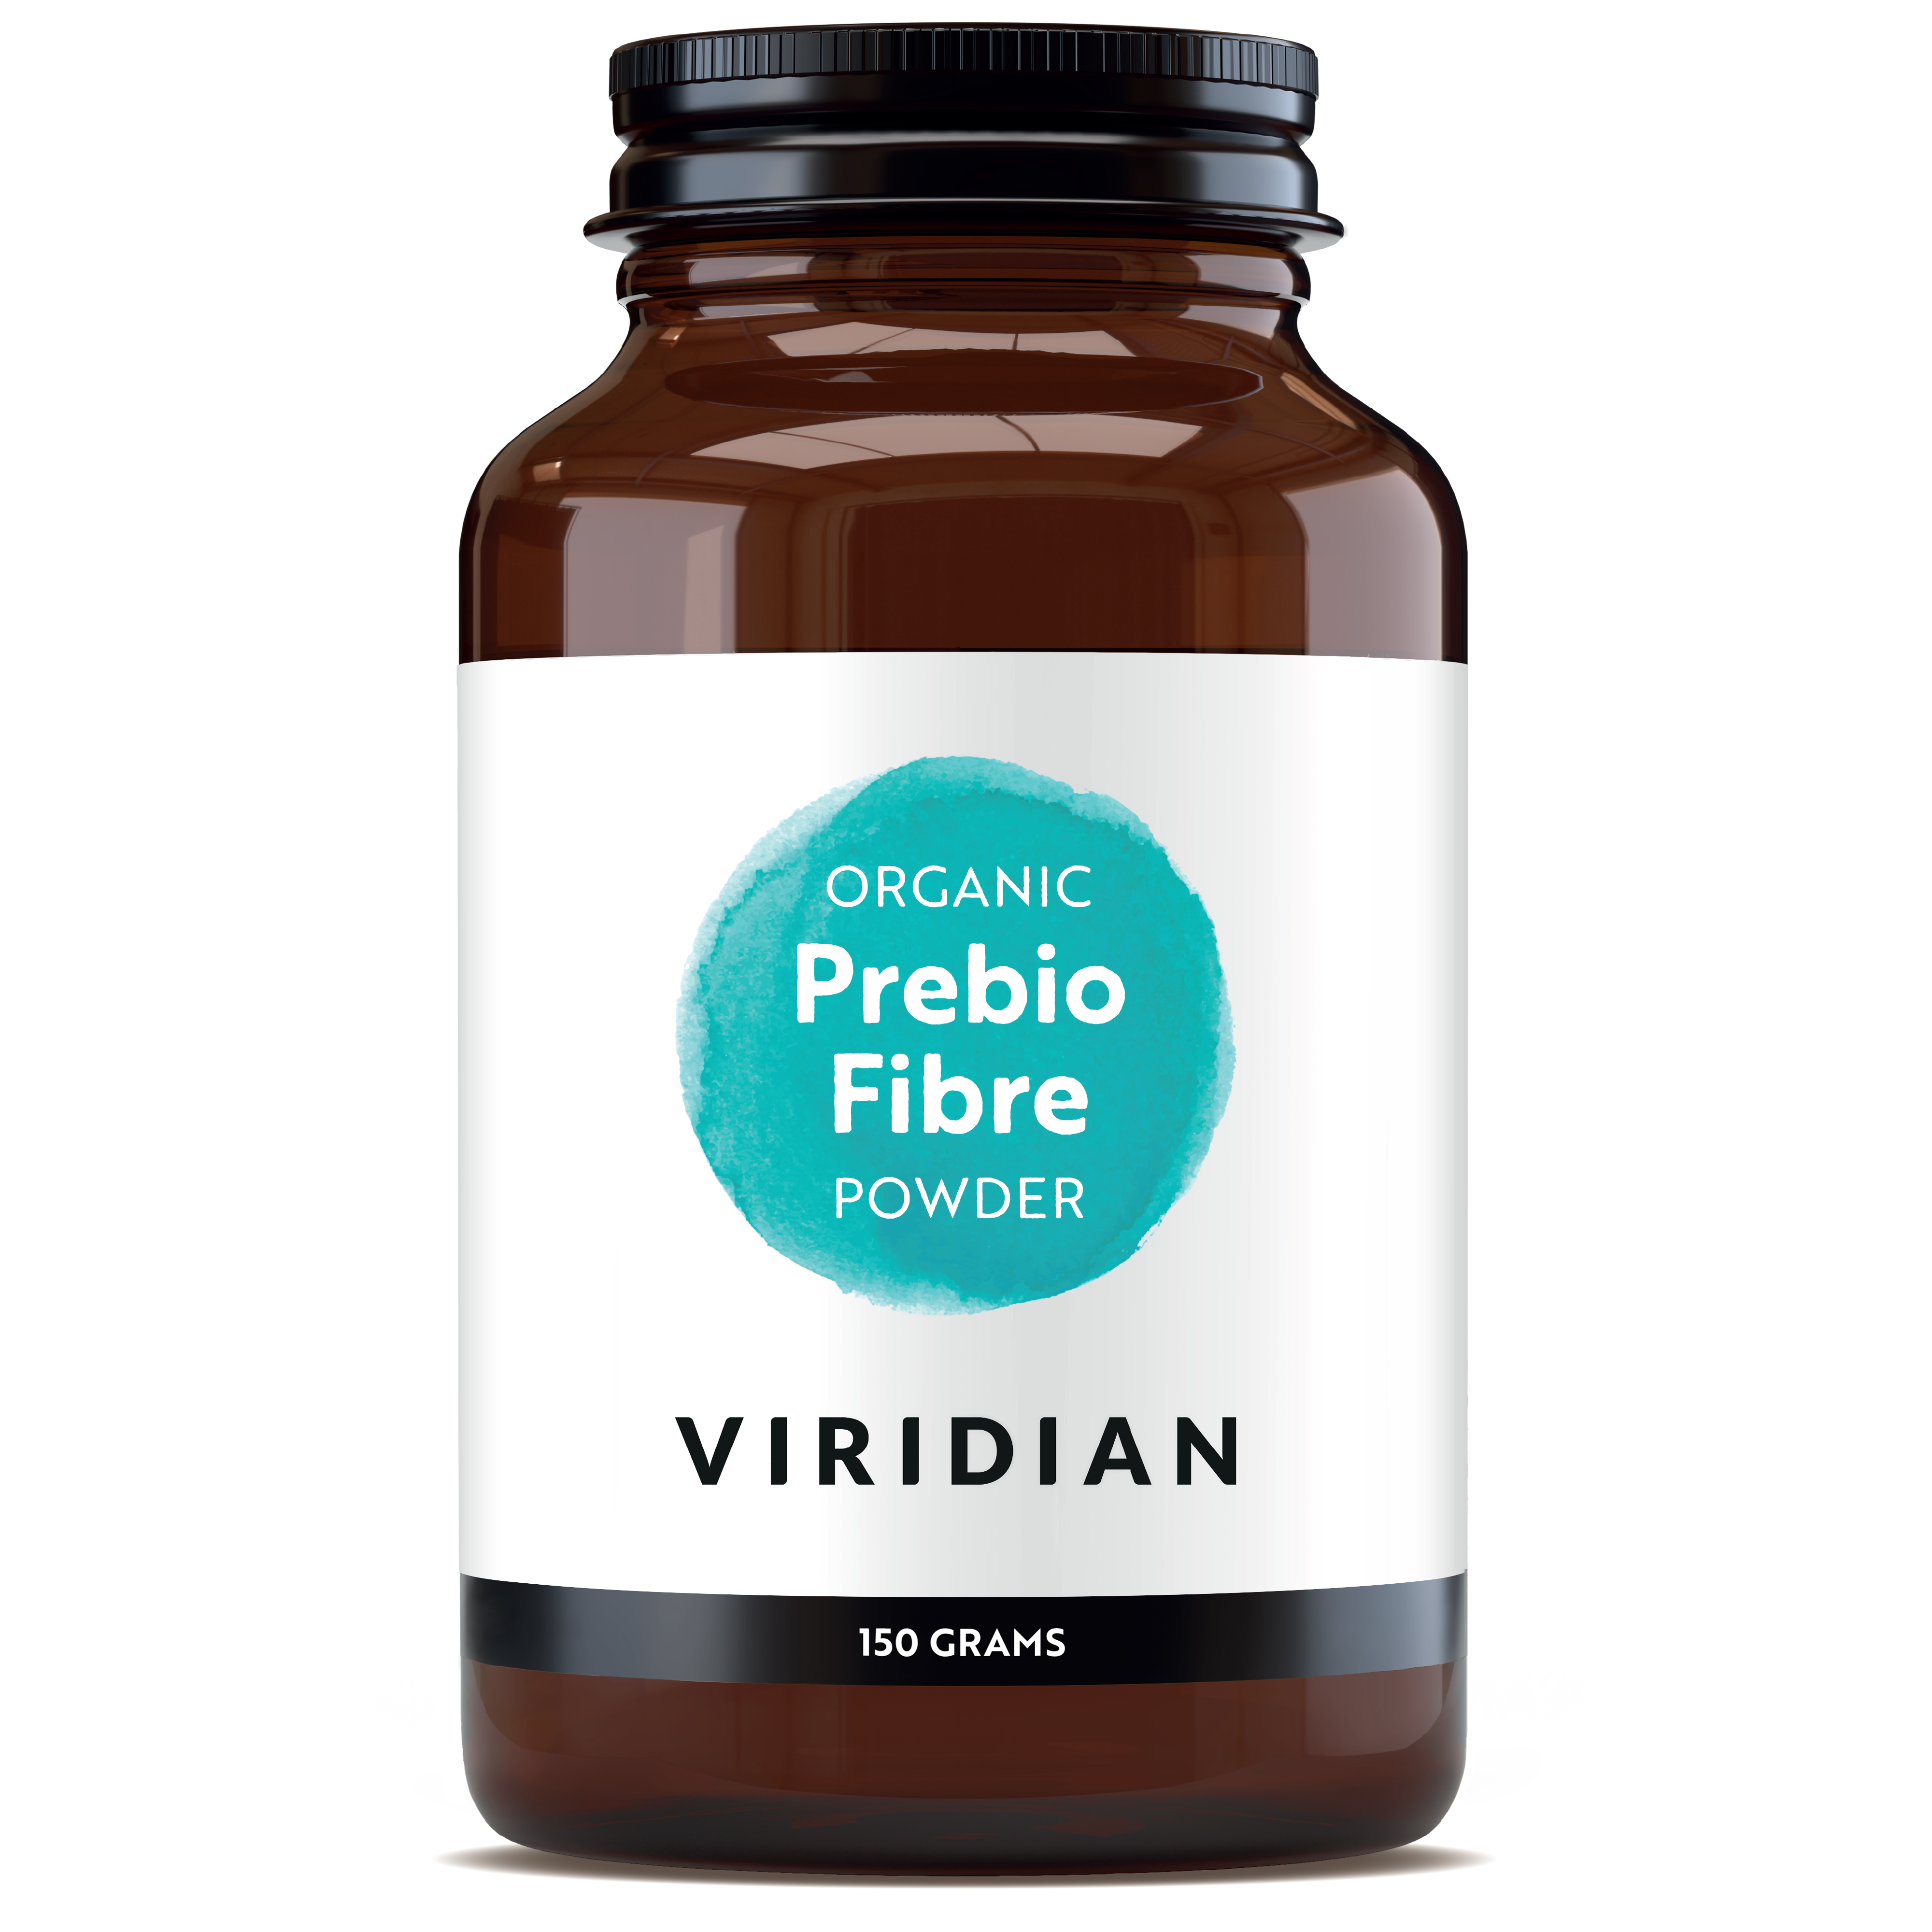 Viridian Organic Prebio Fibre Powder